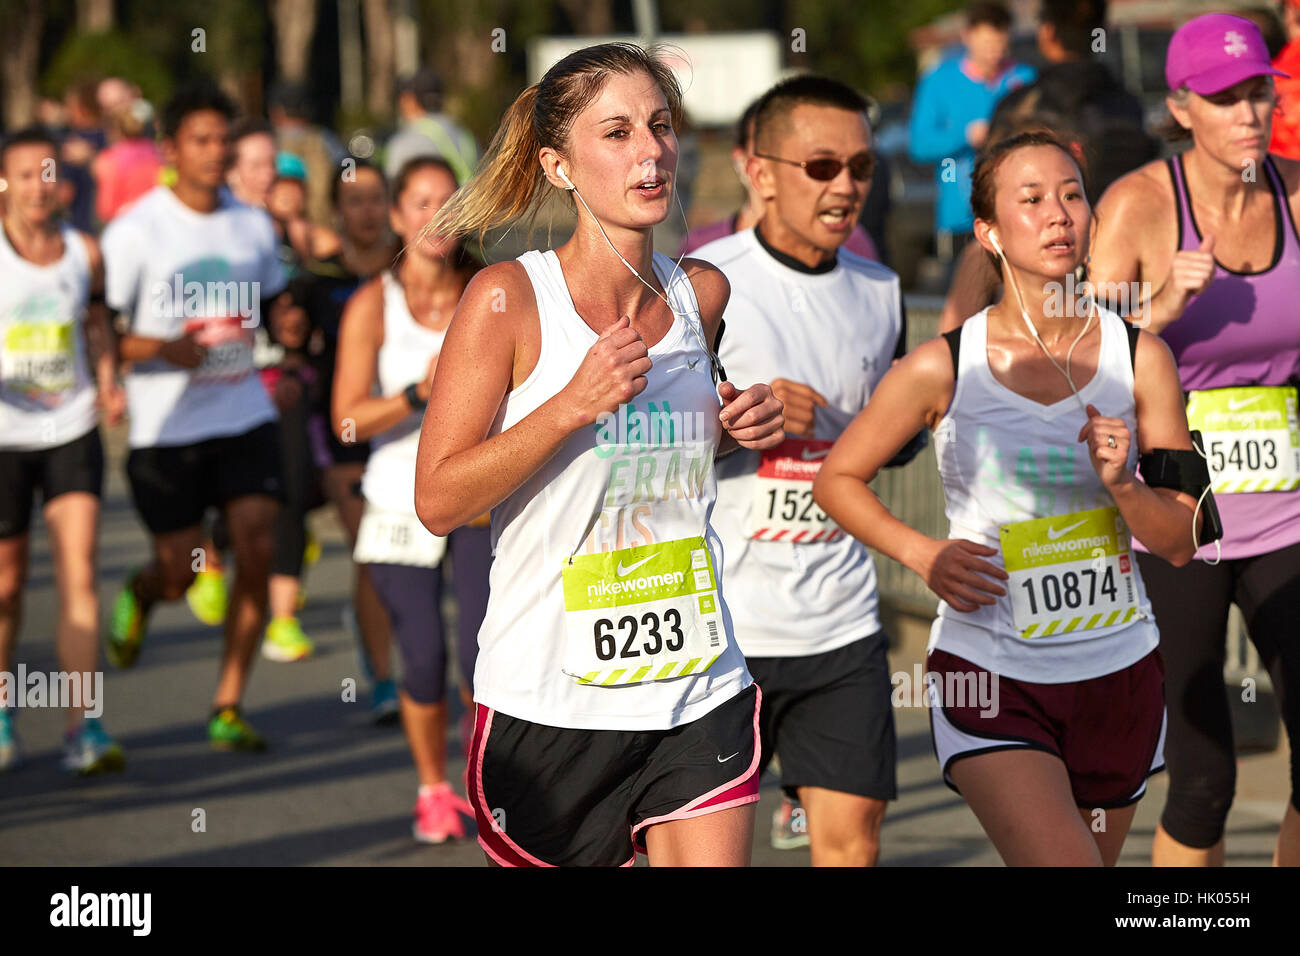 Female Athlete Running In The Nike Woman's Half Marathon, San Francisco,  2015 Stock Photo - Alamy